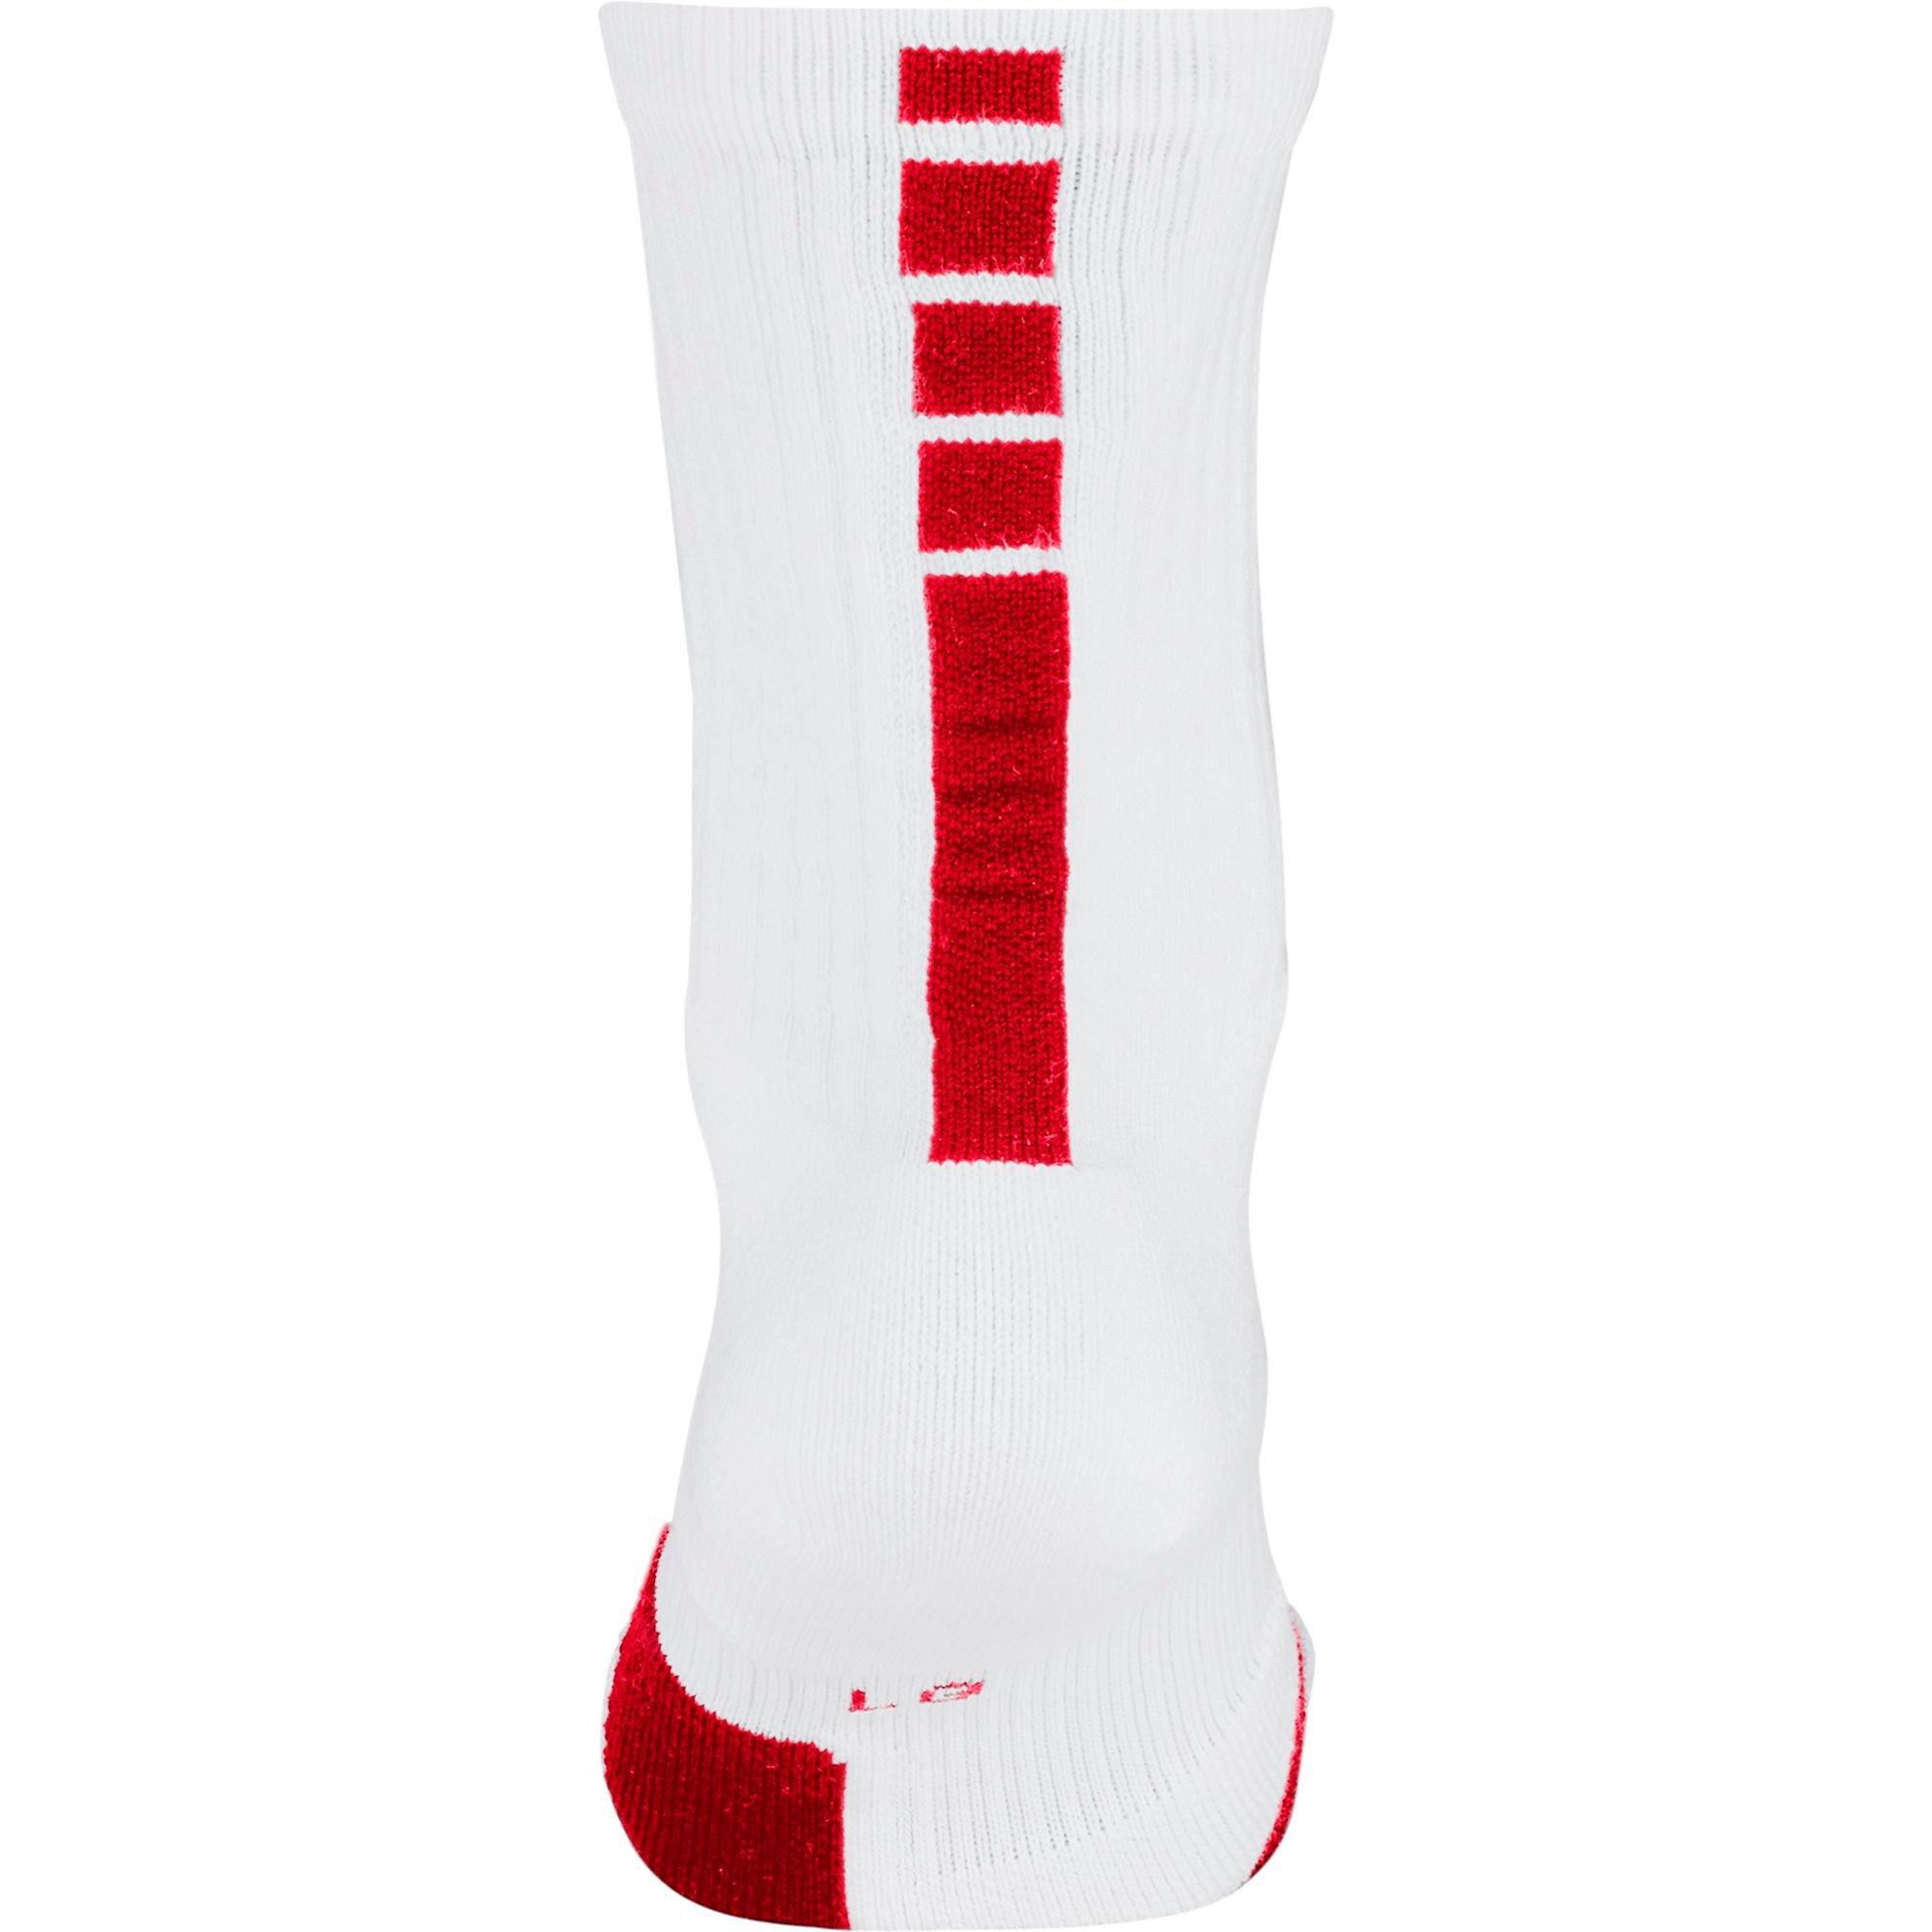 Nodig uit litteken een paar Nike Elite Unisex Crew Basketball Socks - White/Red